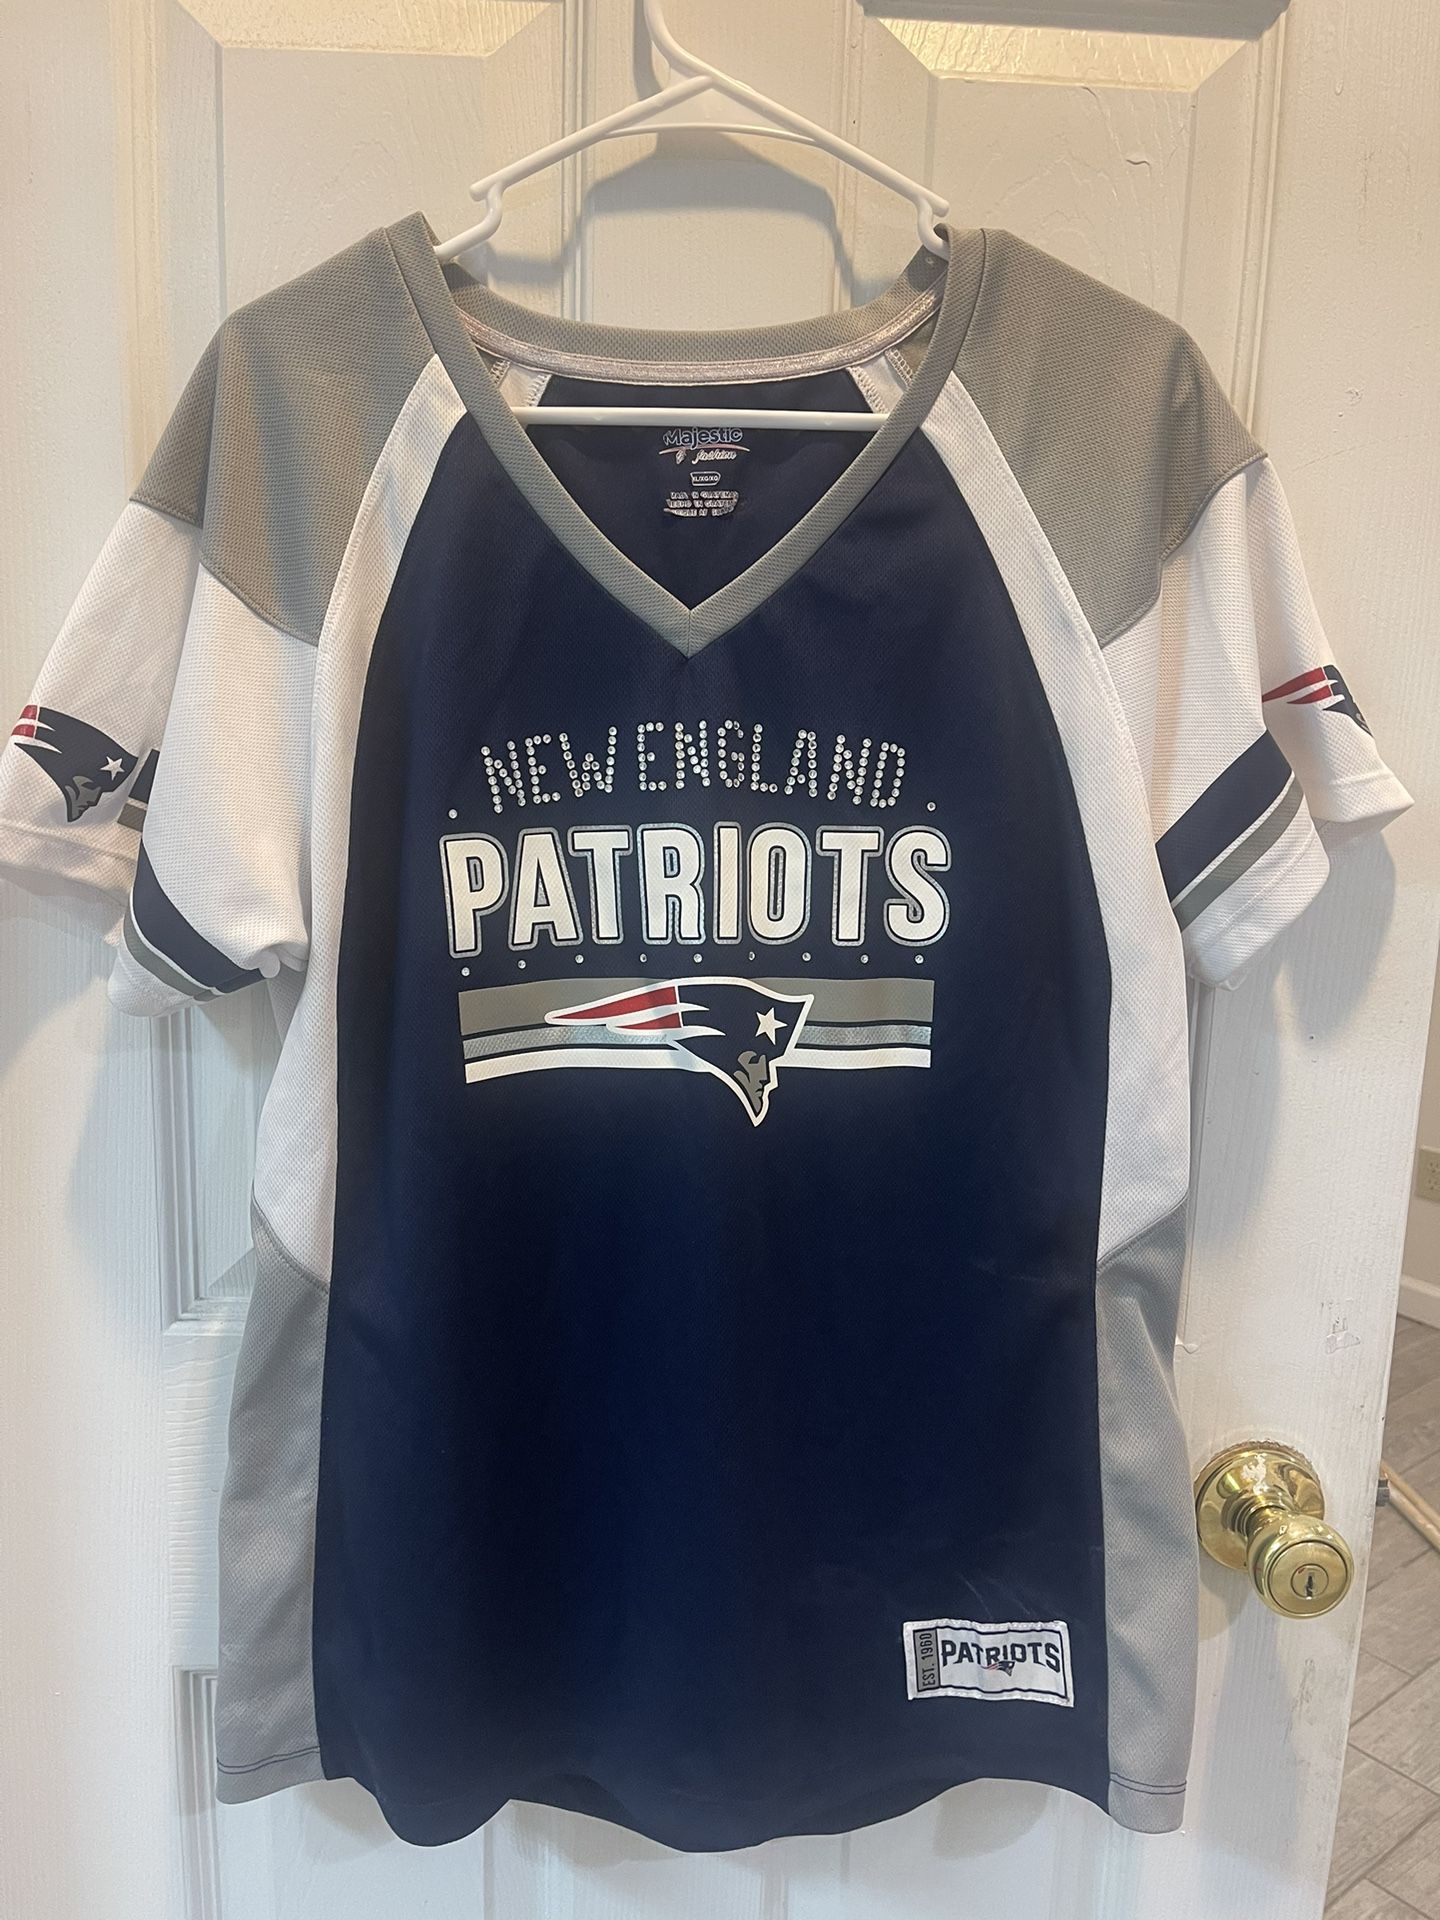 New England Patriots Jersey